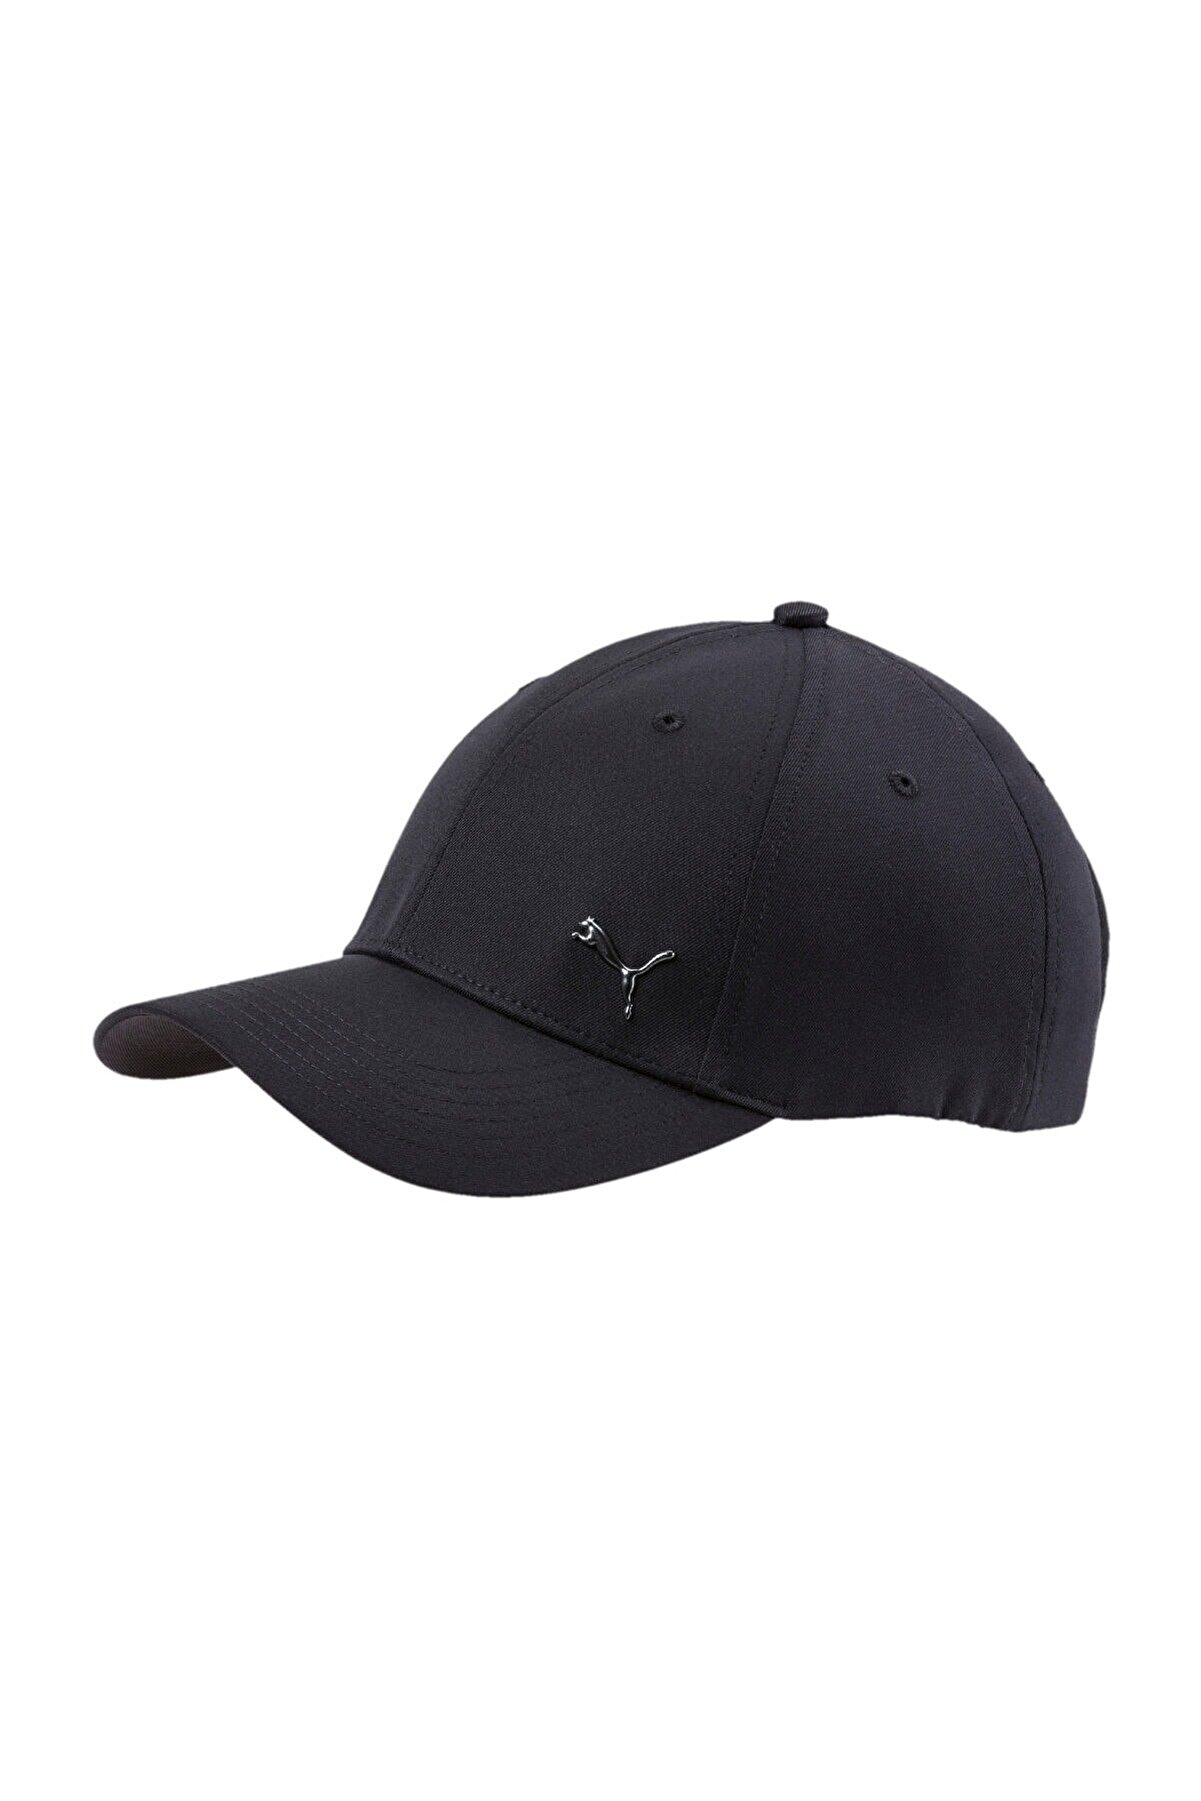 Puma Unisex Siyah Metal Cat Cap Şapka 021269-01